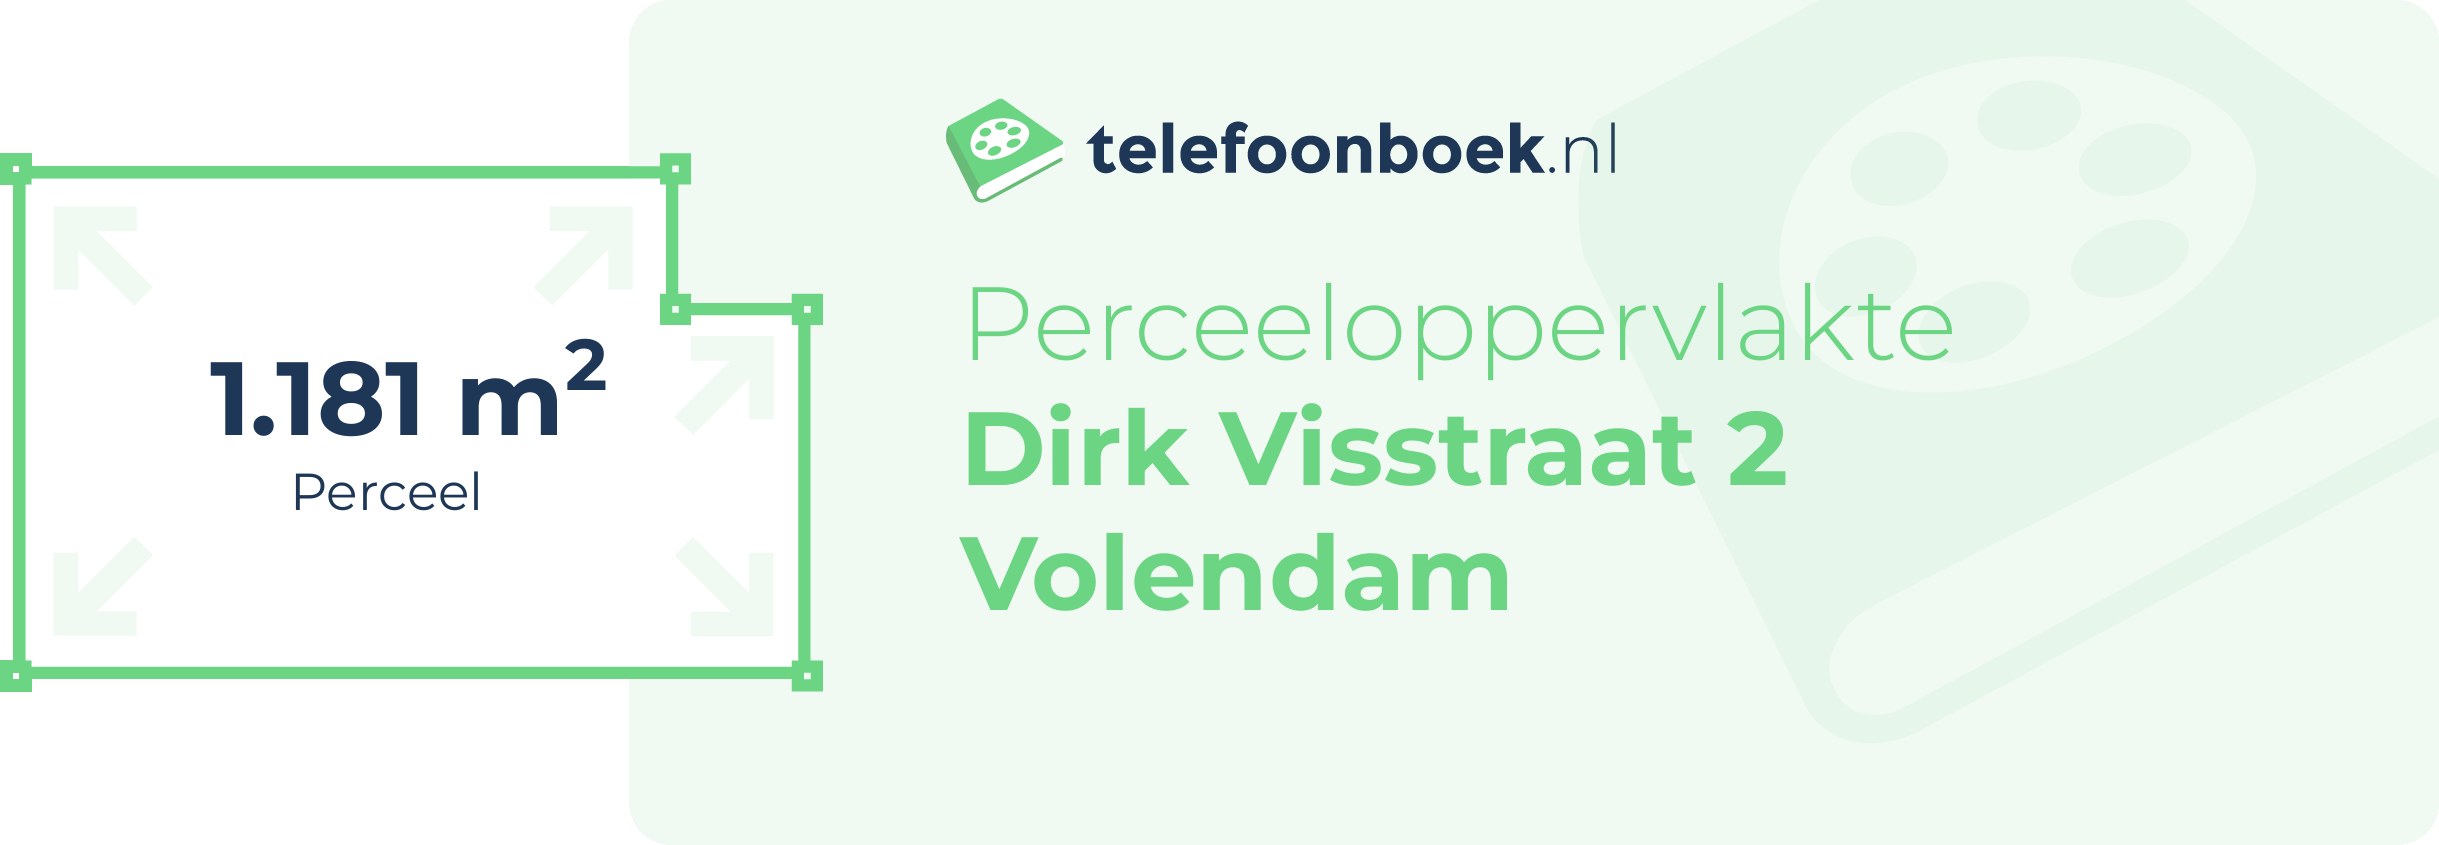 Perceeloppervlakte Dirk Visstraat 2 Volendam